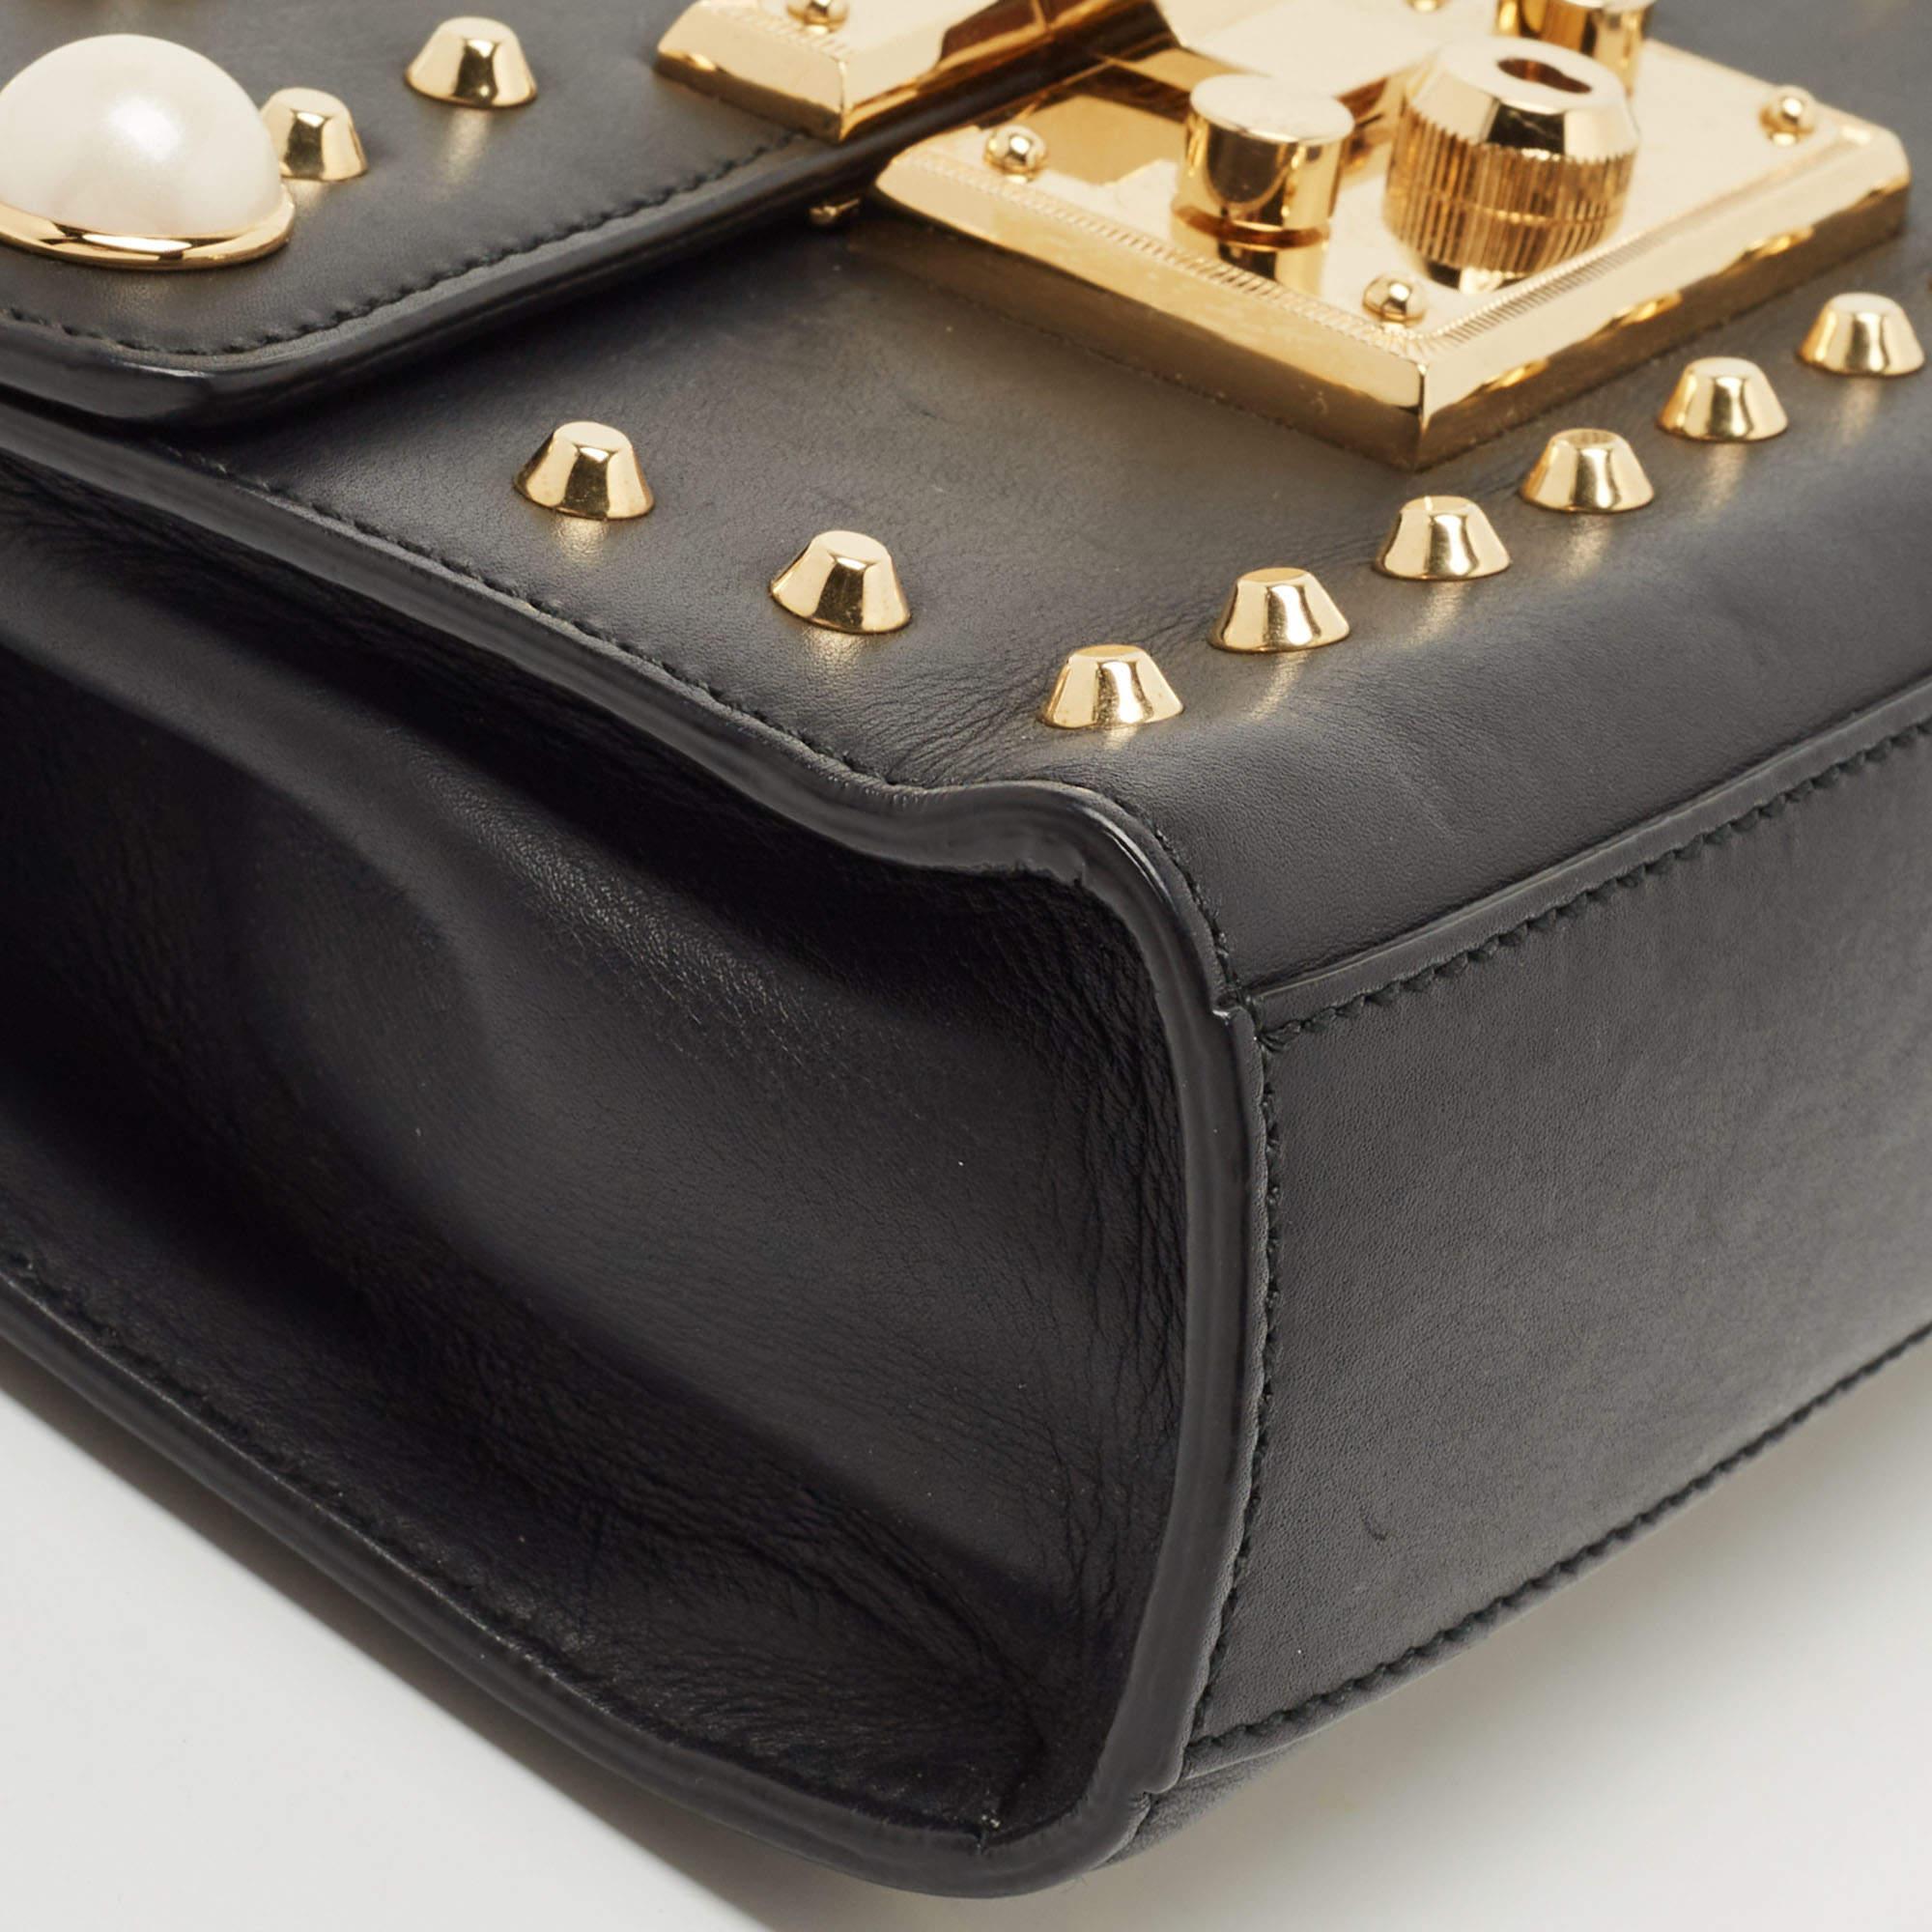 Gucci Black Leather Small Pearl Studded Padlock Shoulder Bag 9